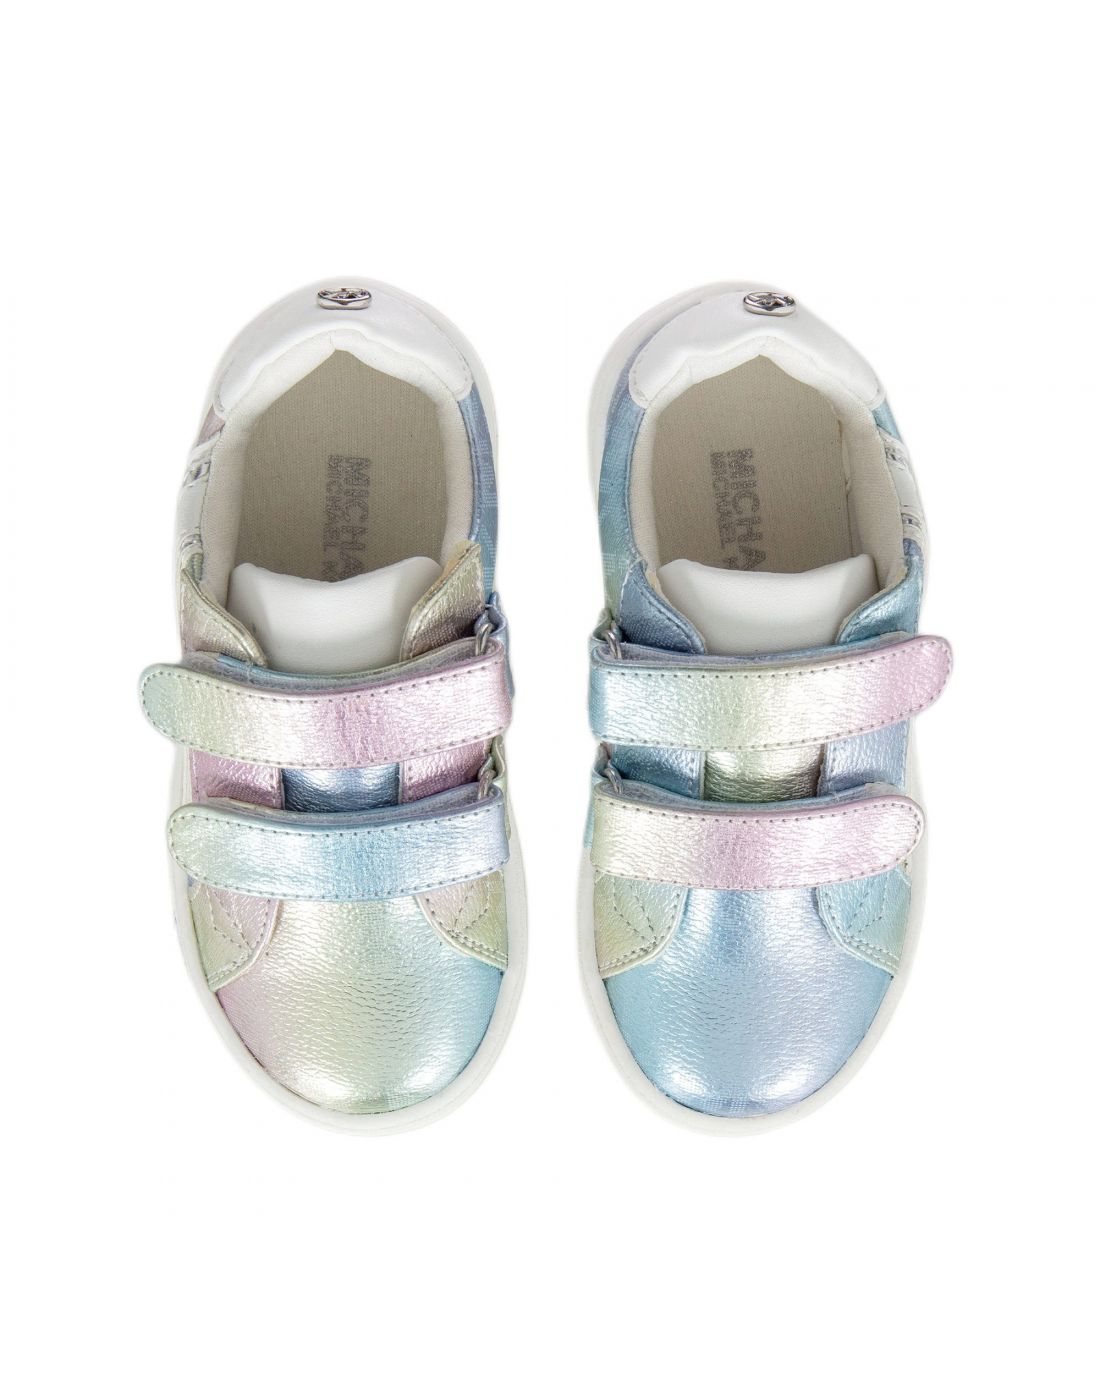 Michael Kors Girls Sneakers Shoes